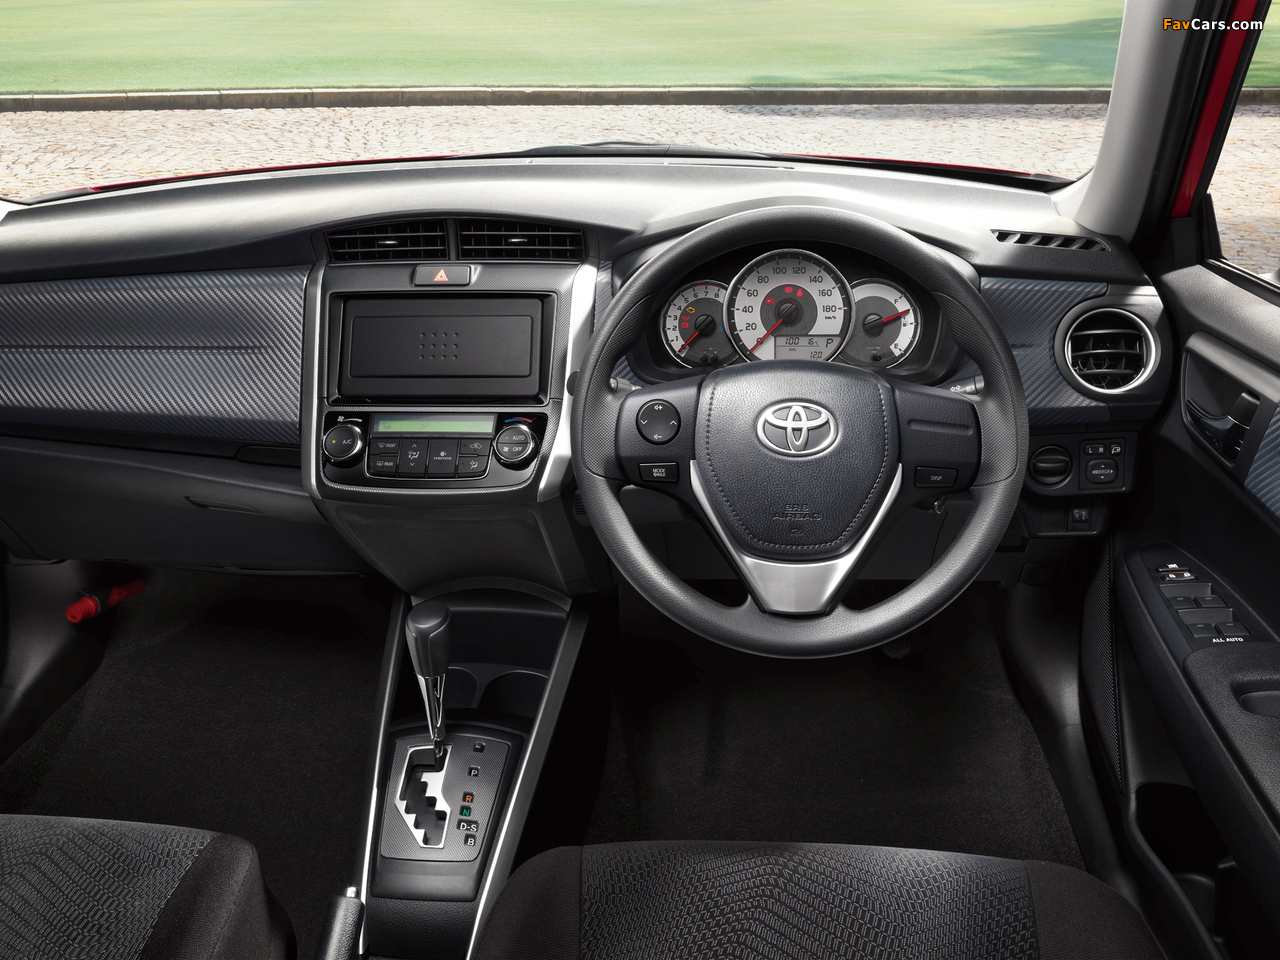 Toyota Corolla Fielder 1.5 G 2012 photos (1280 x 960)